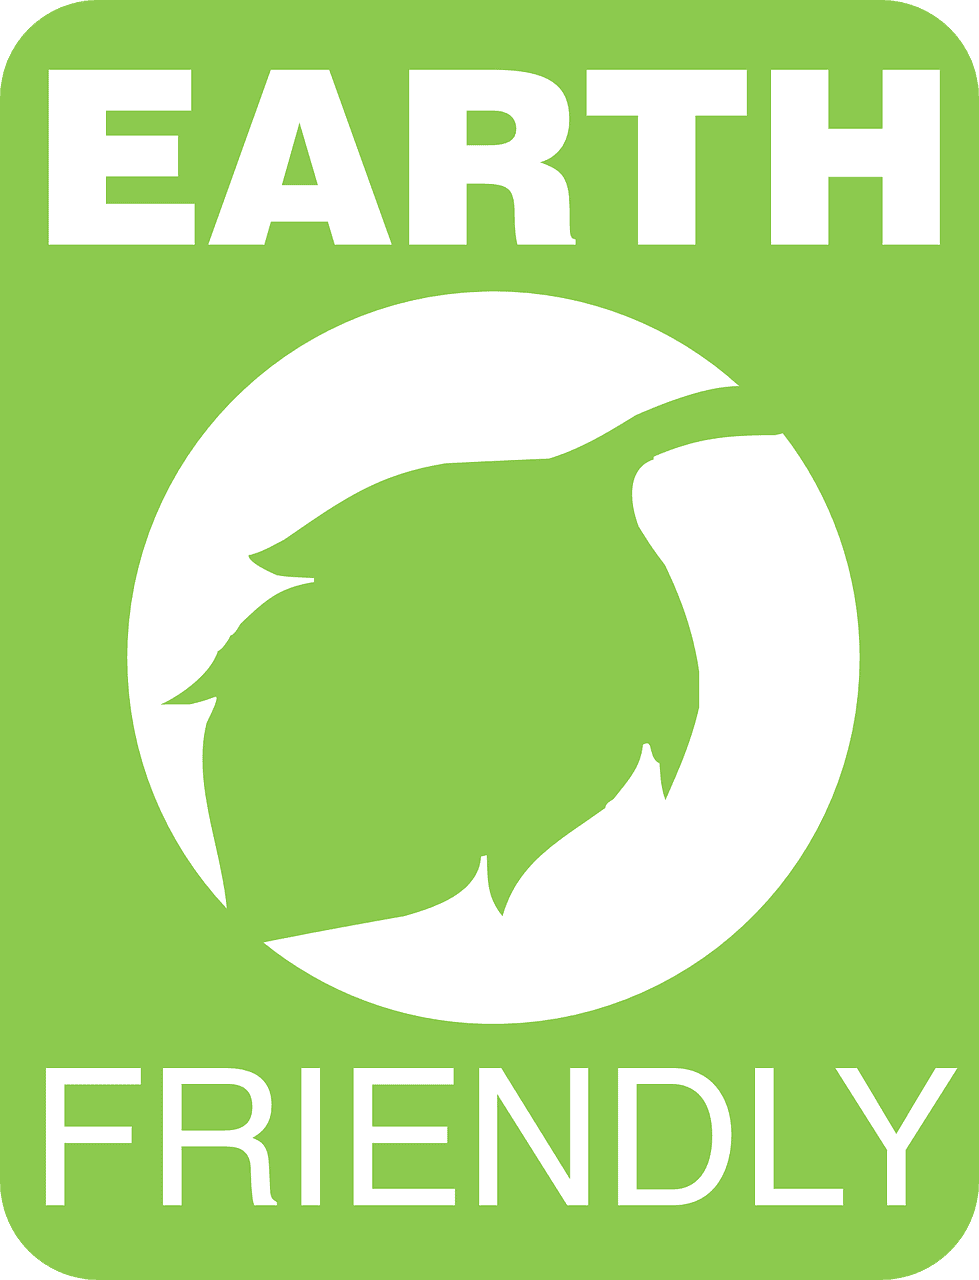 Green environment symbol